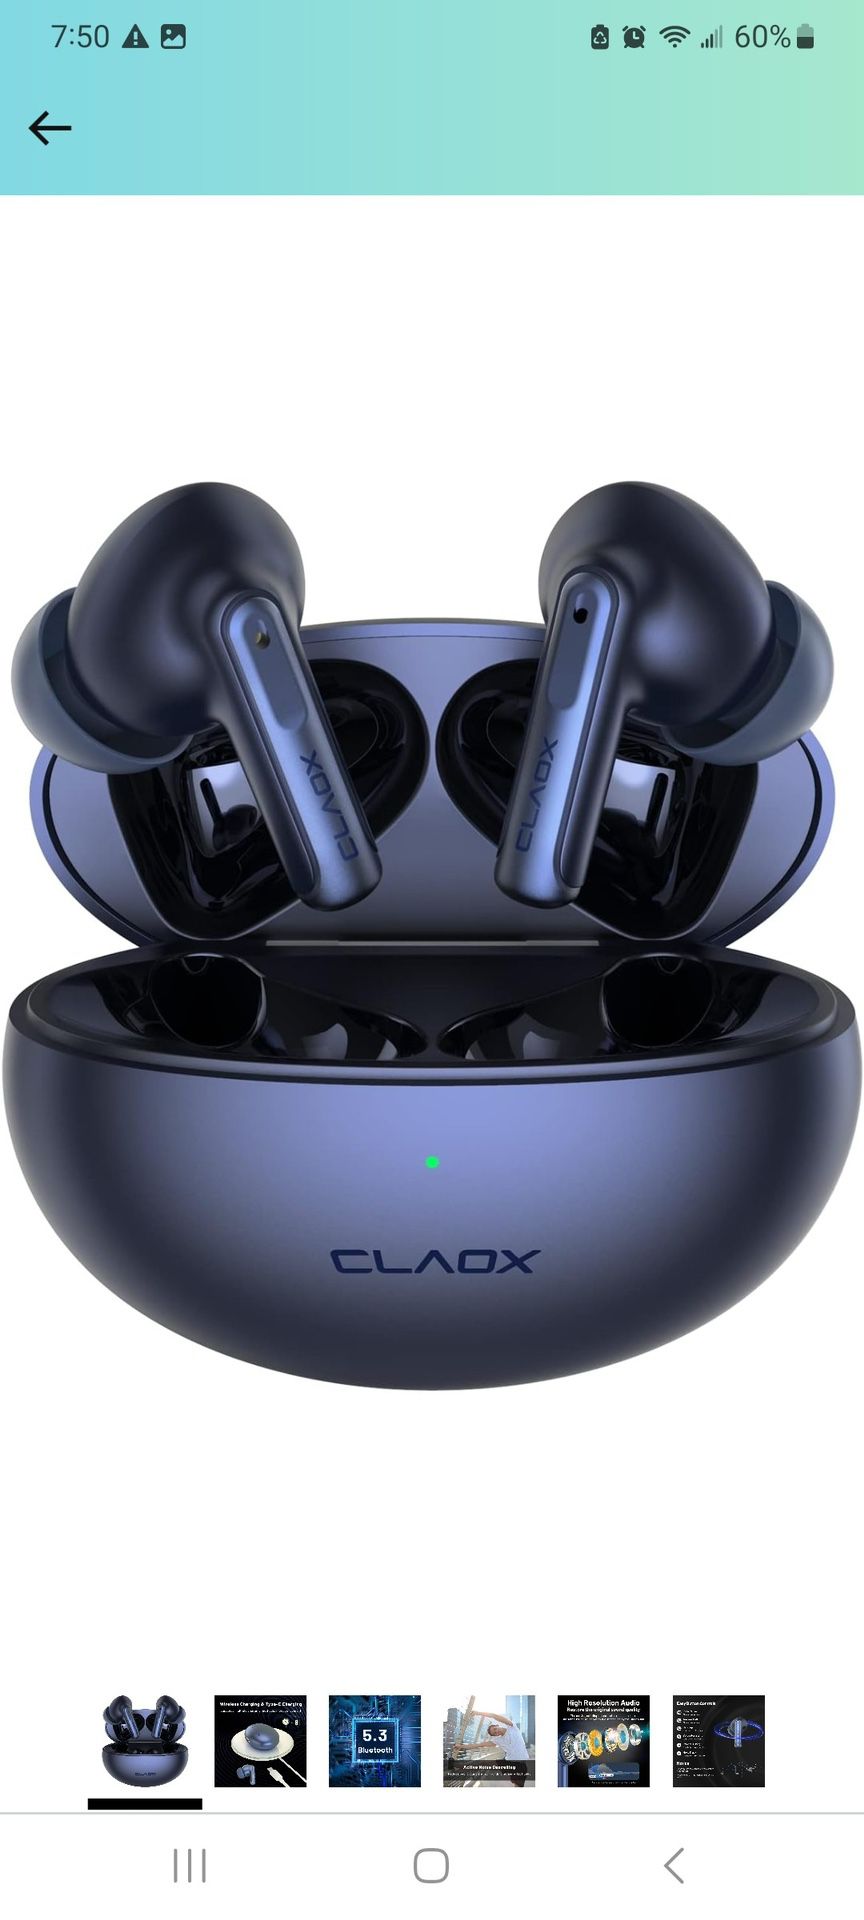 Claox Flash Earbuds 